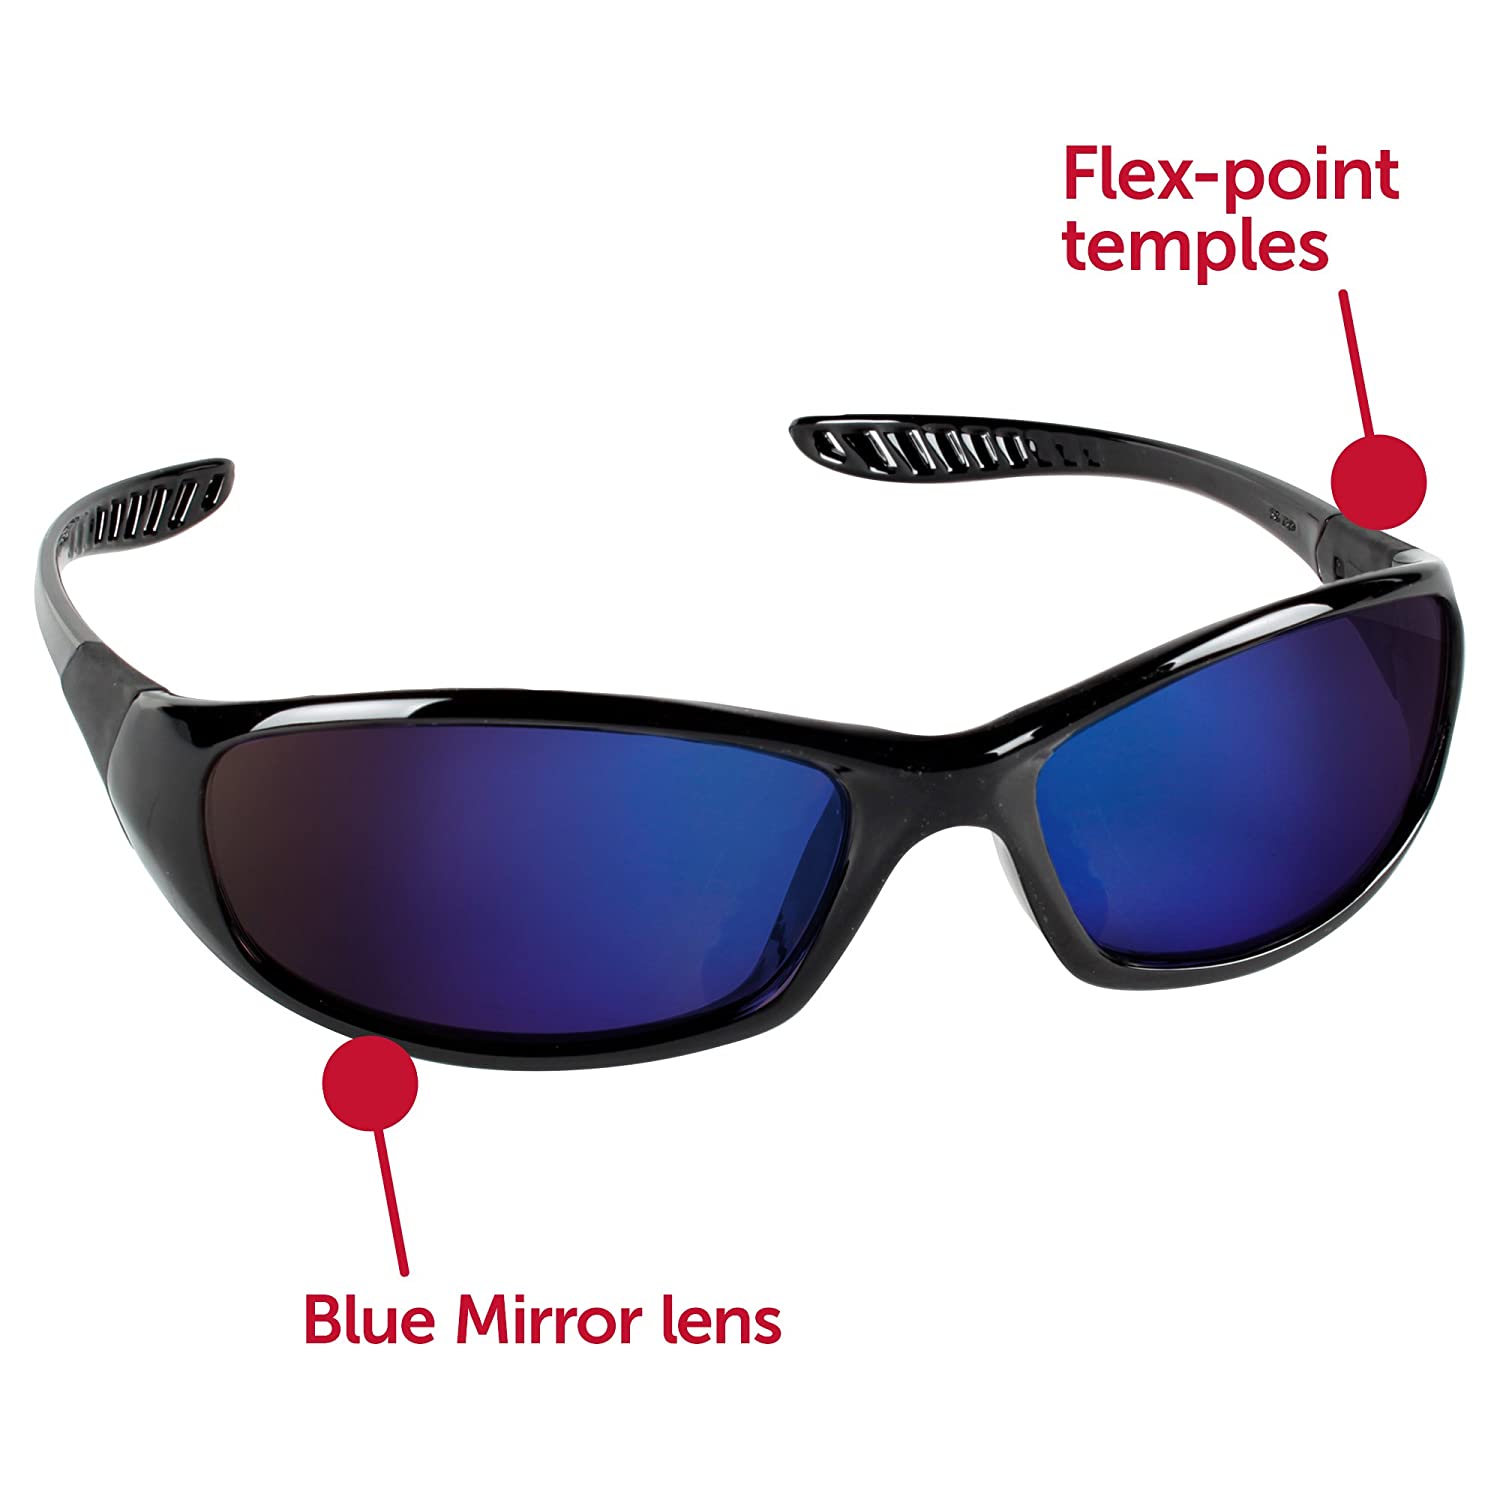 V40 Hellraiser* Safety Eyewear, Blue Mirror Lens, Anti-Scratch, Black Frame - image 2 of 5